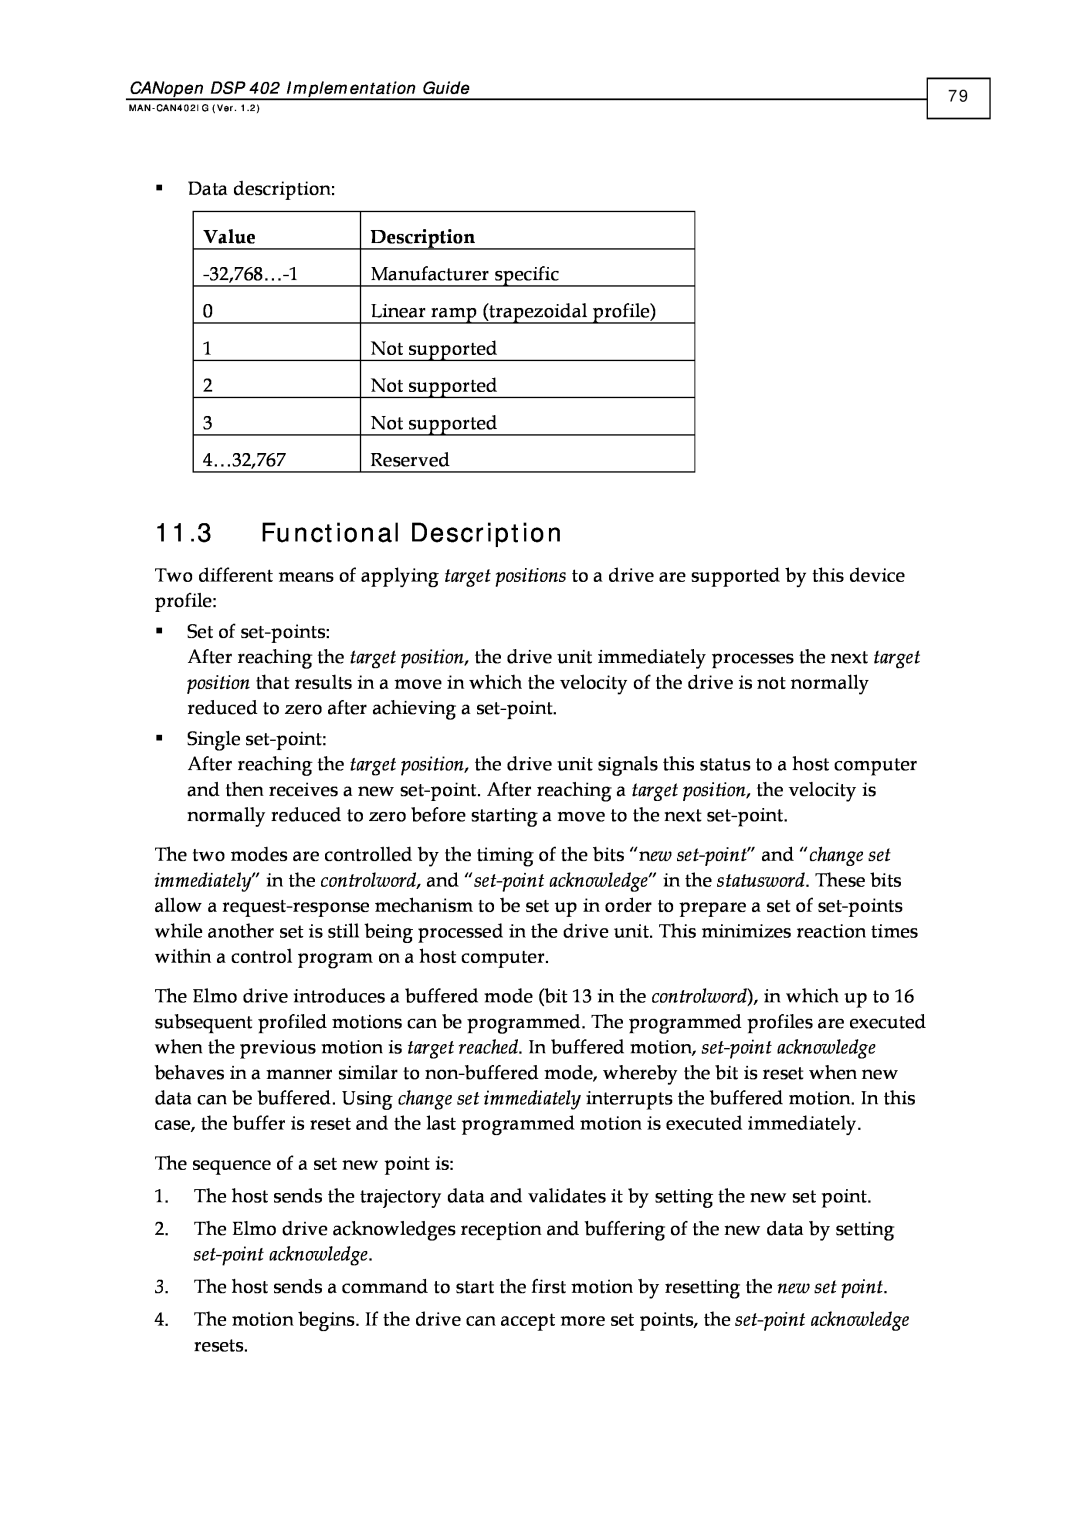 Elmo DSP 402 manual 11.3Functional Description 